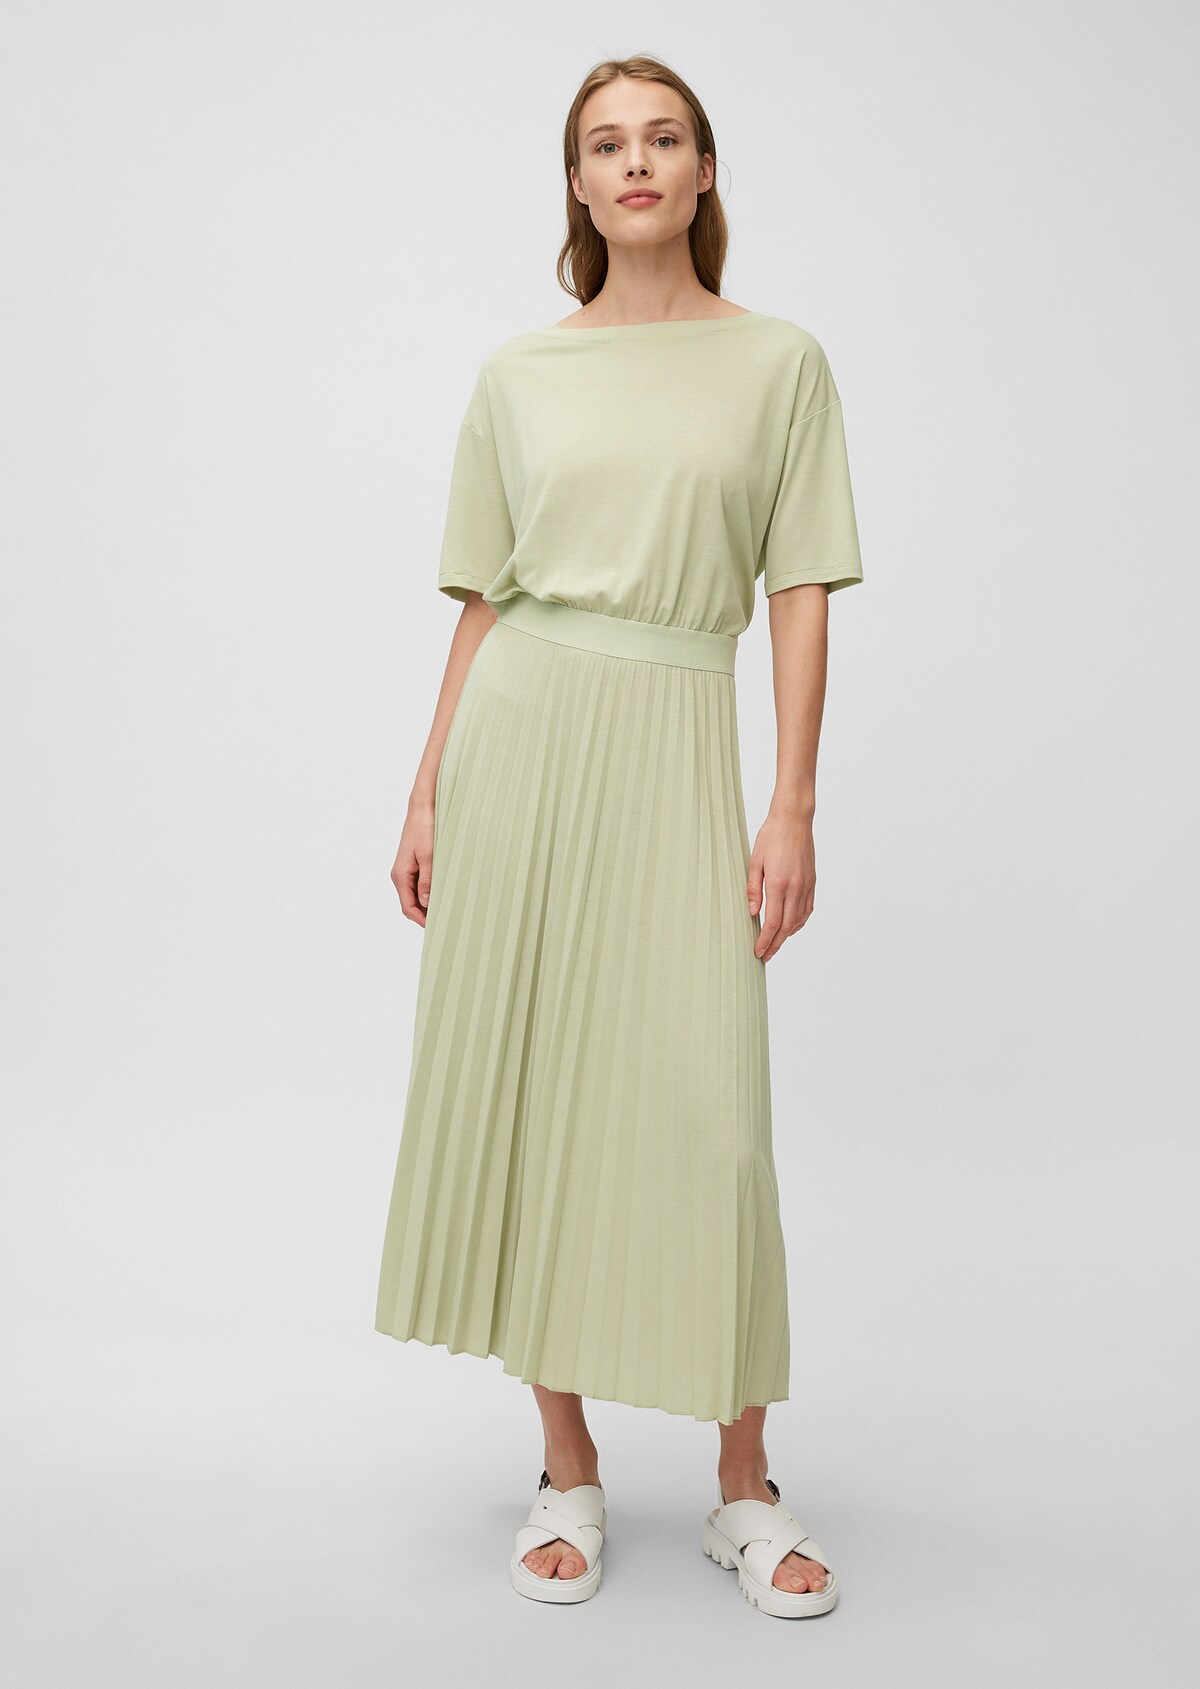 Pleated dress made of soft jersey - green | Midi dresses | MARC O’POLO